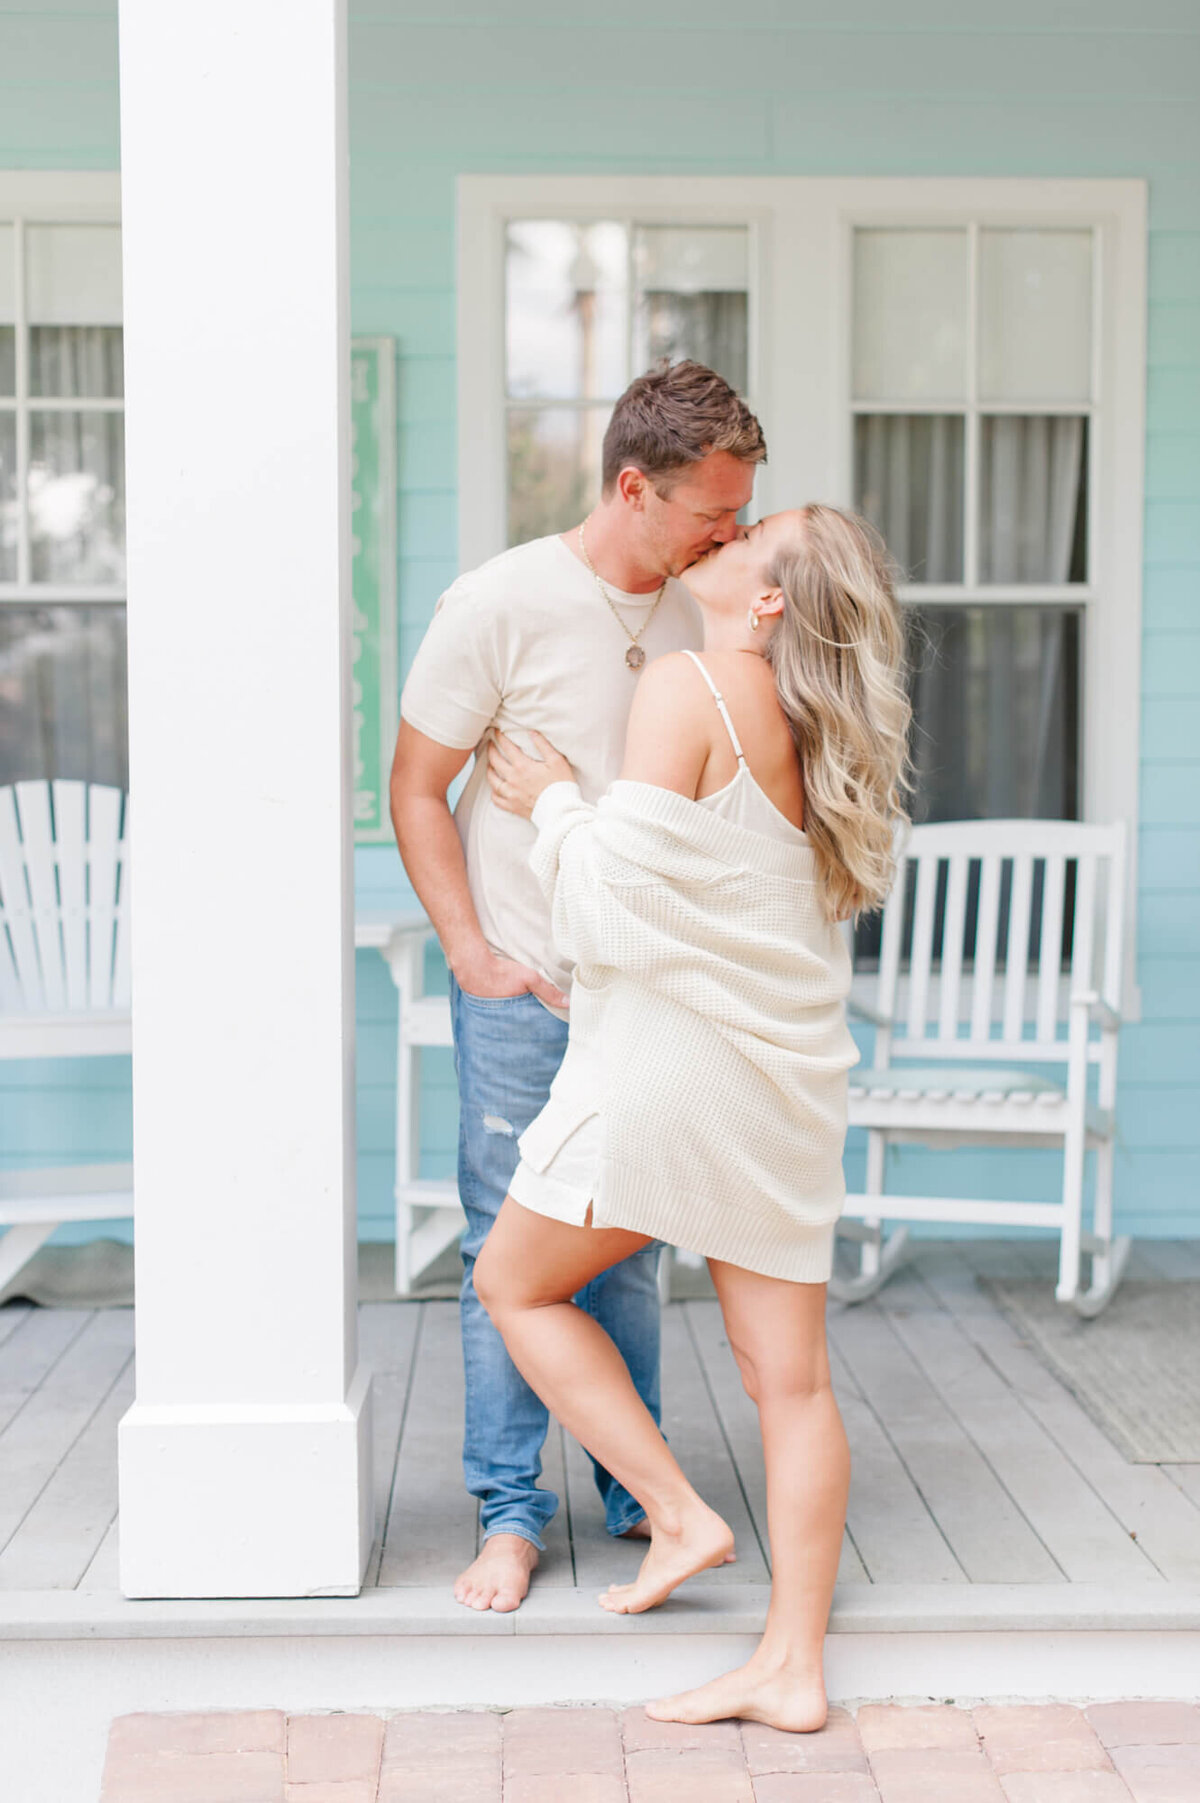 Orlando florida couple kisses during their family photography session at their coastal Florida home.